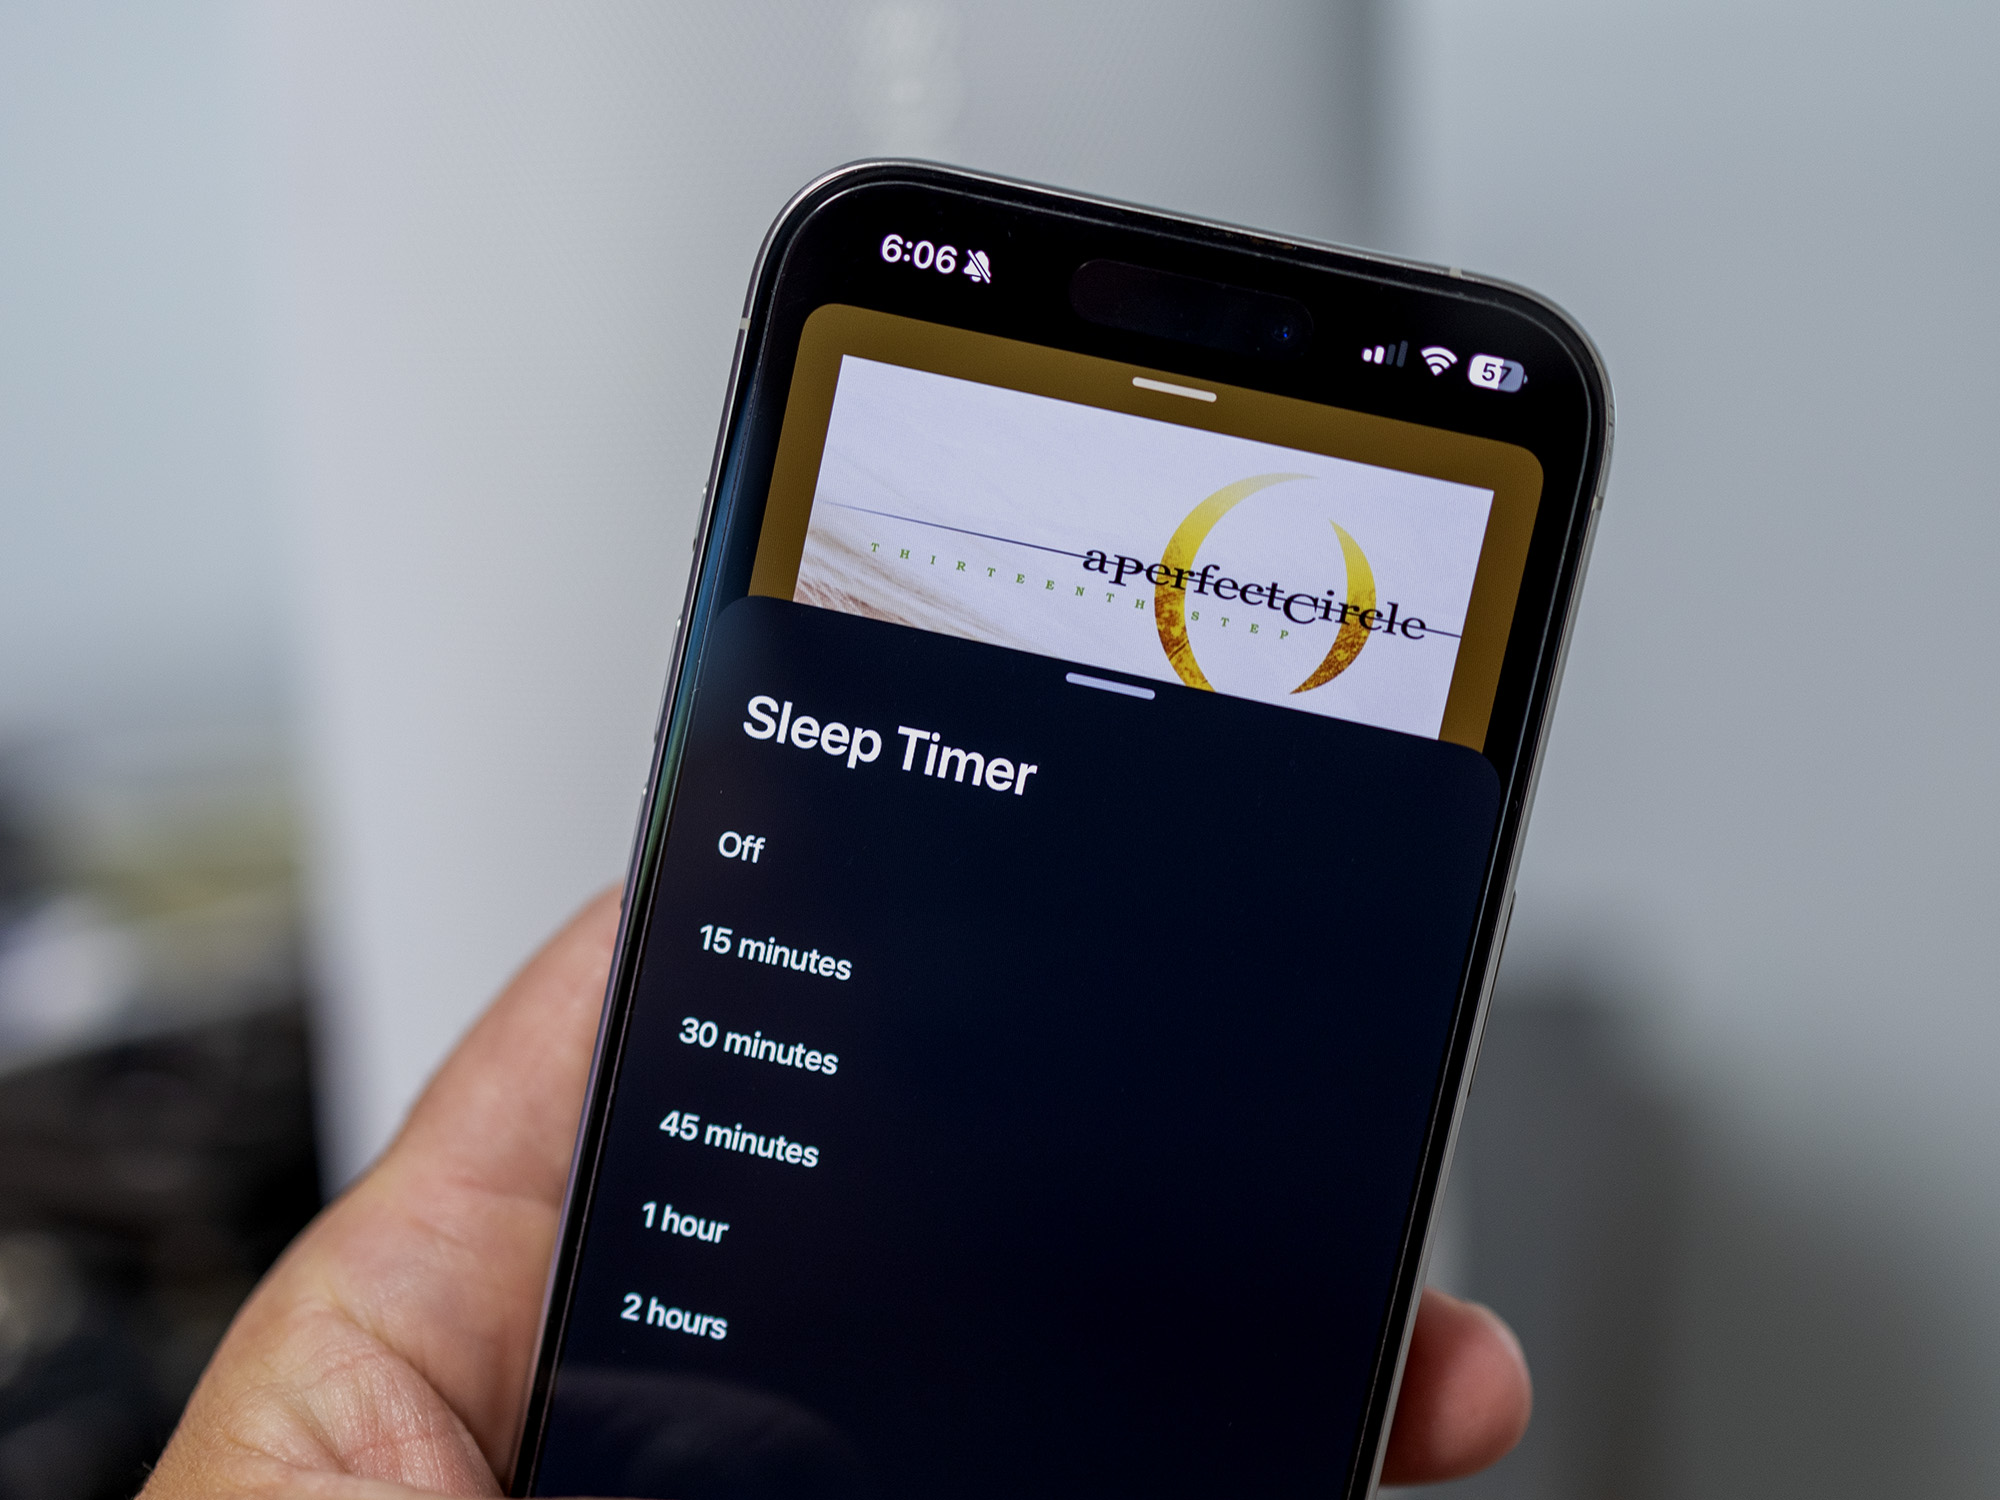 Sleep timer settings in the Sonos app.